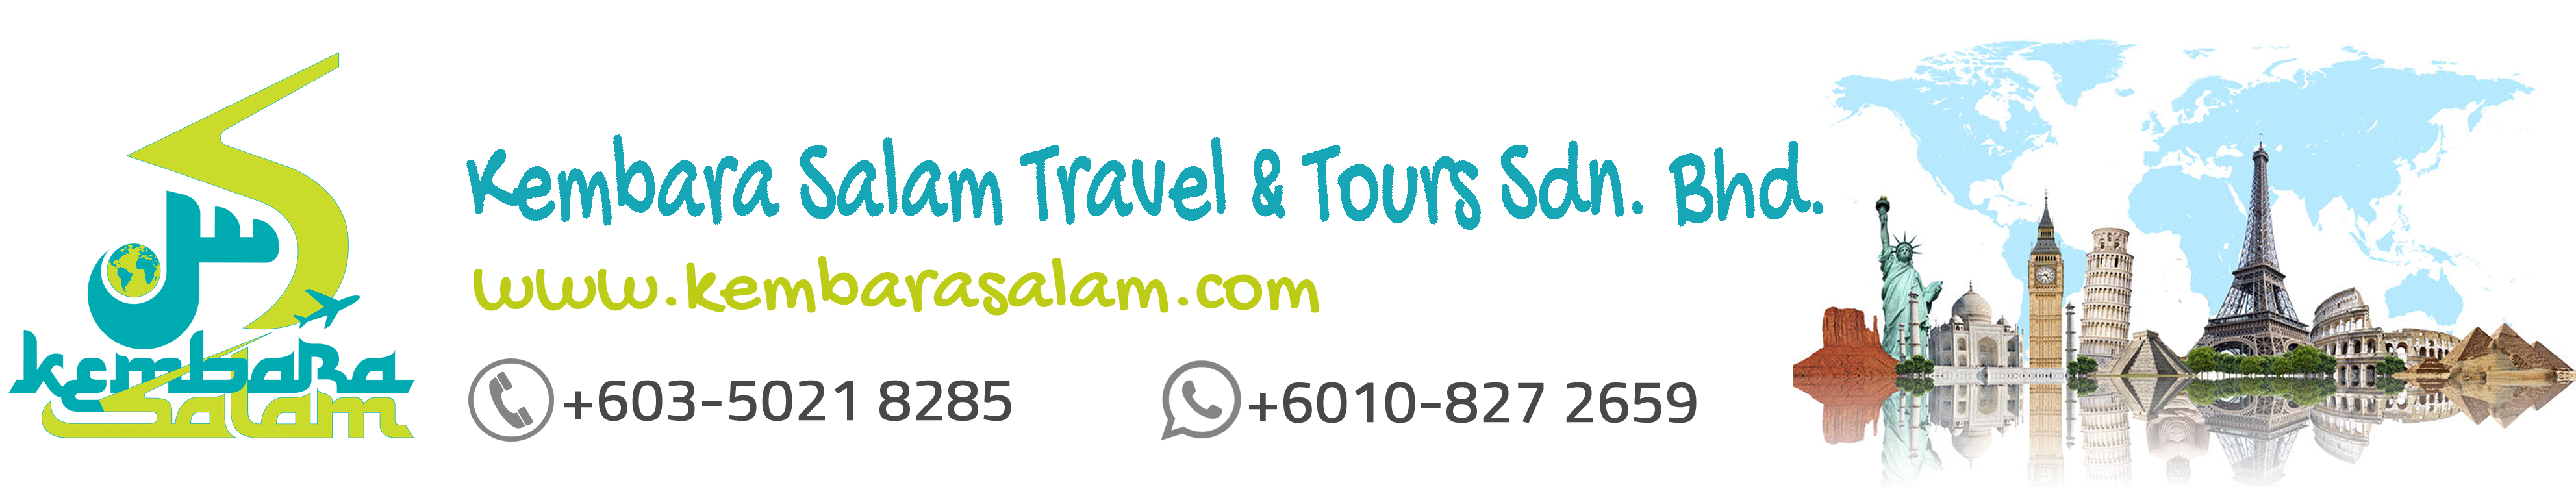 Kembara Salam Travel & Tours